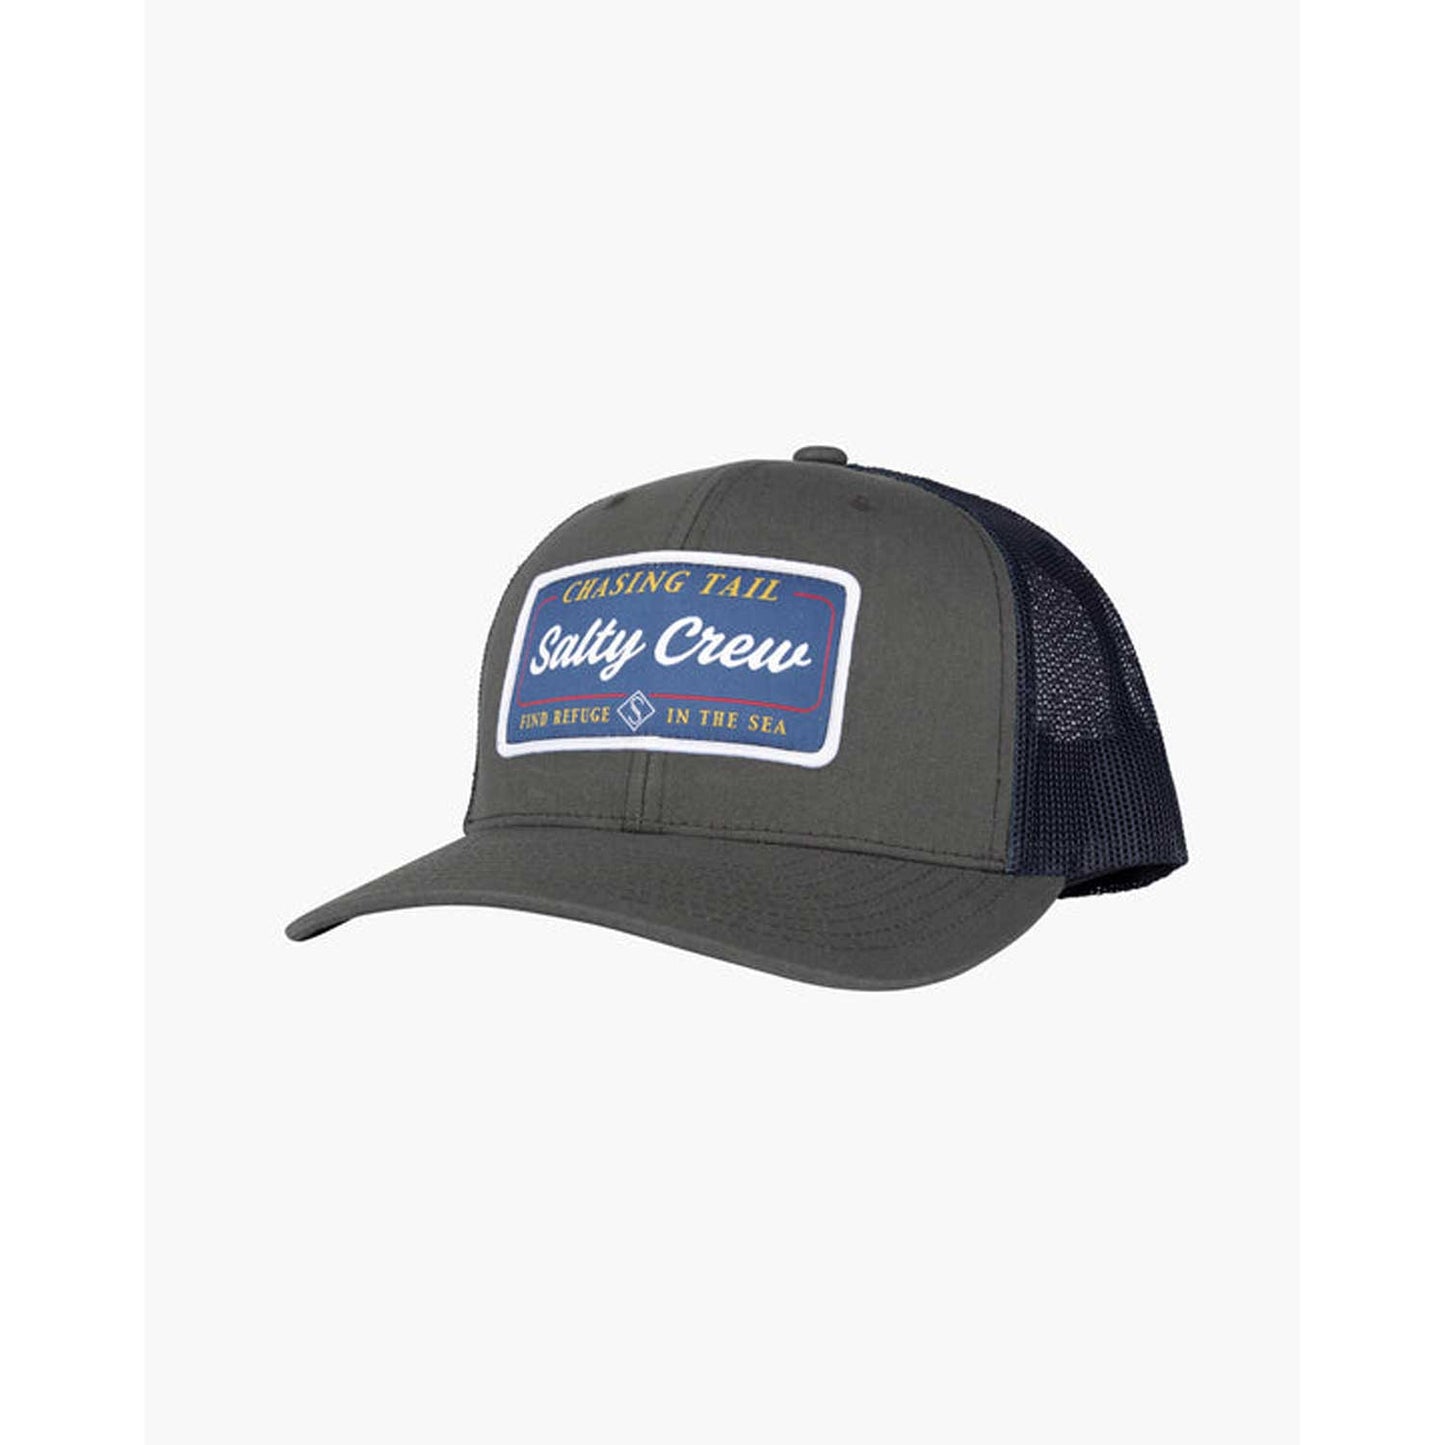 Salty Crew Marina Retro Trucker Hat "Chasing Tail"